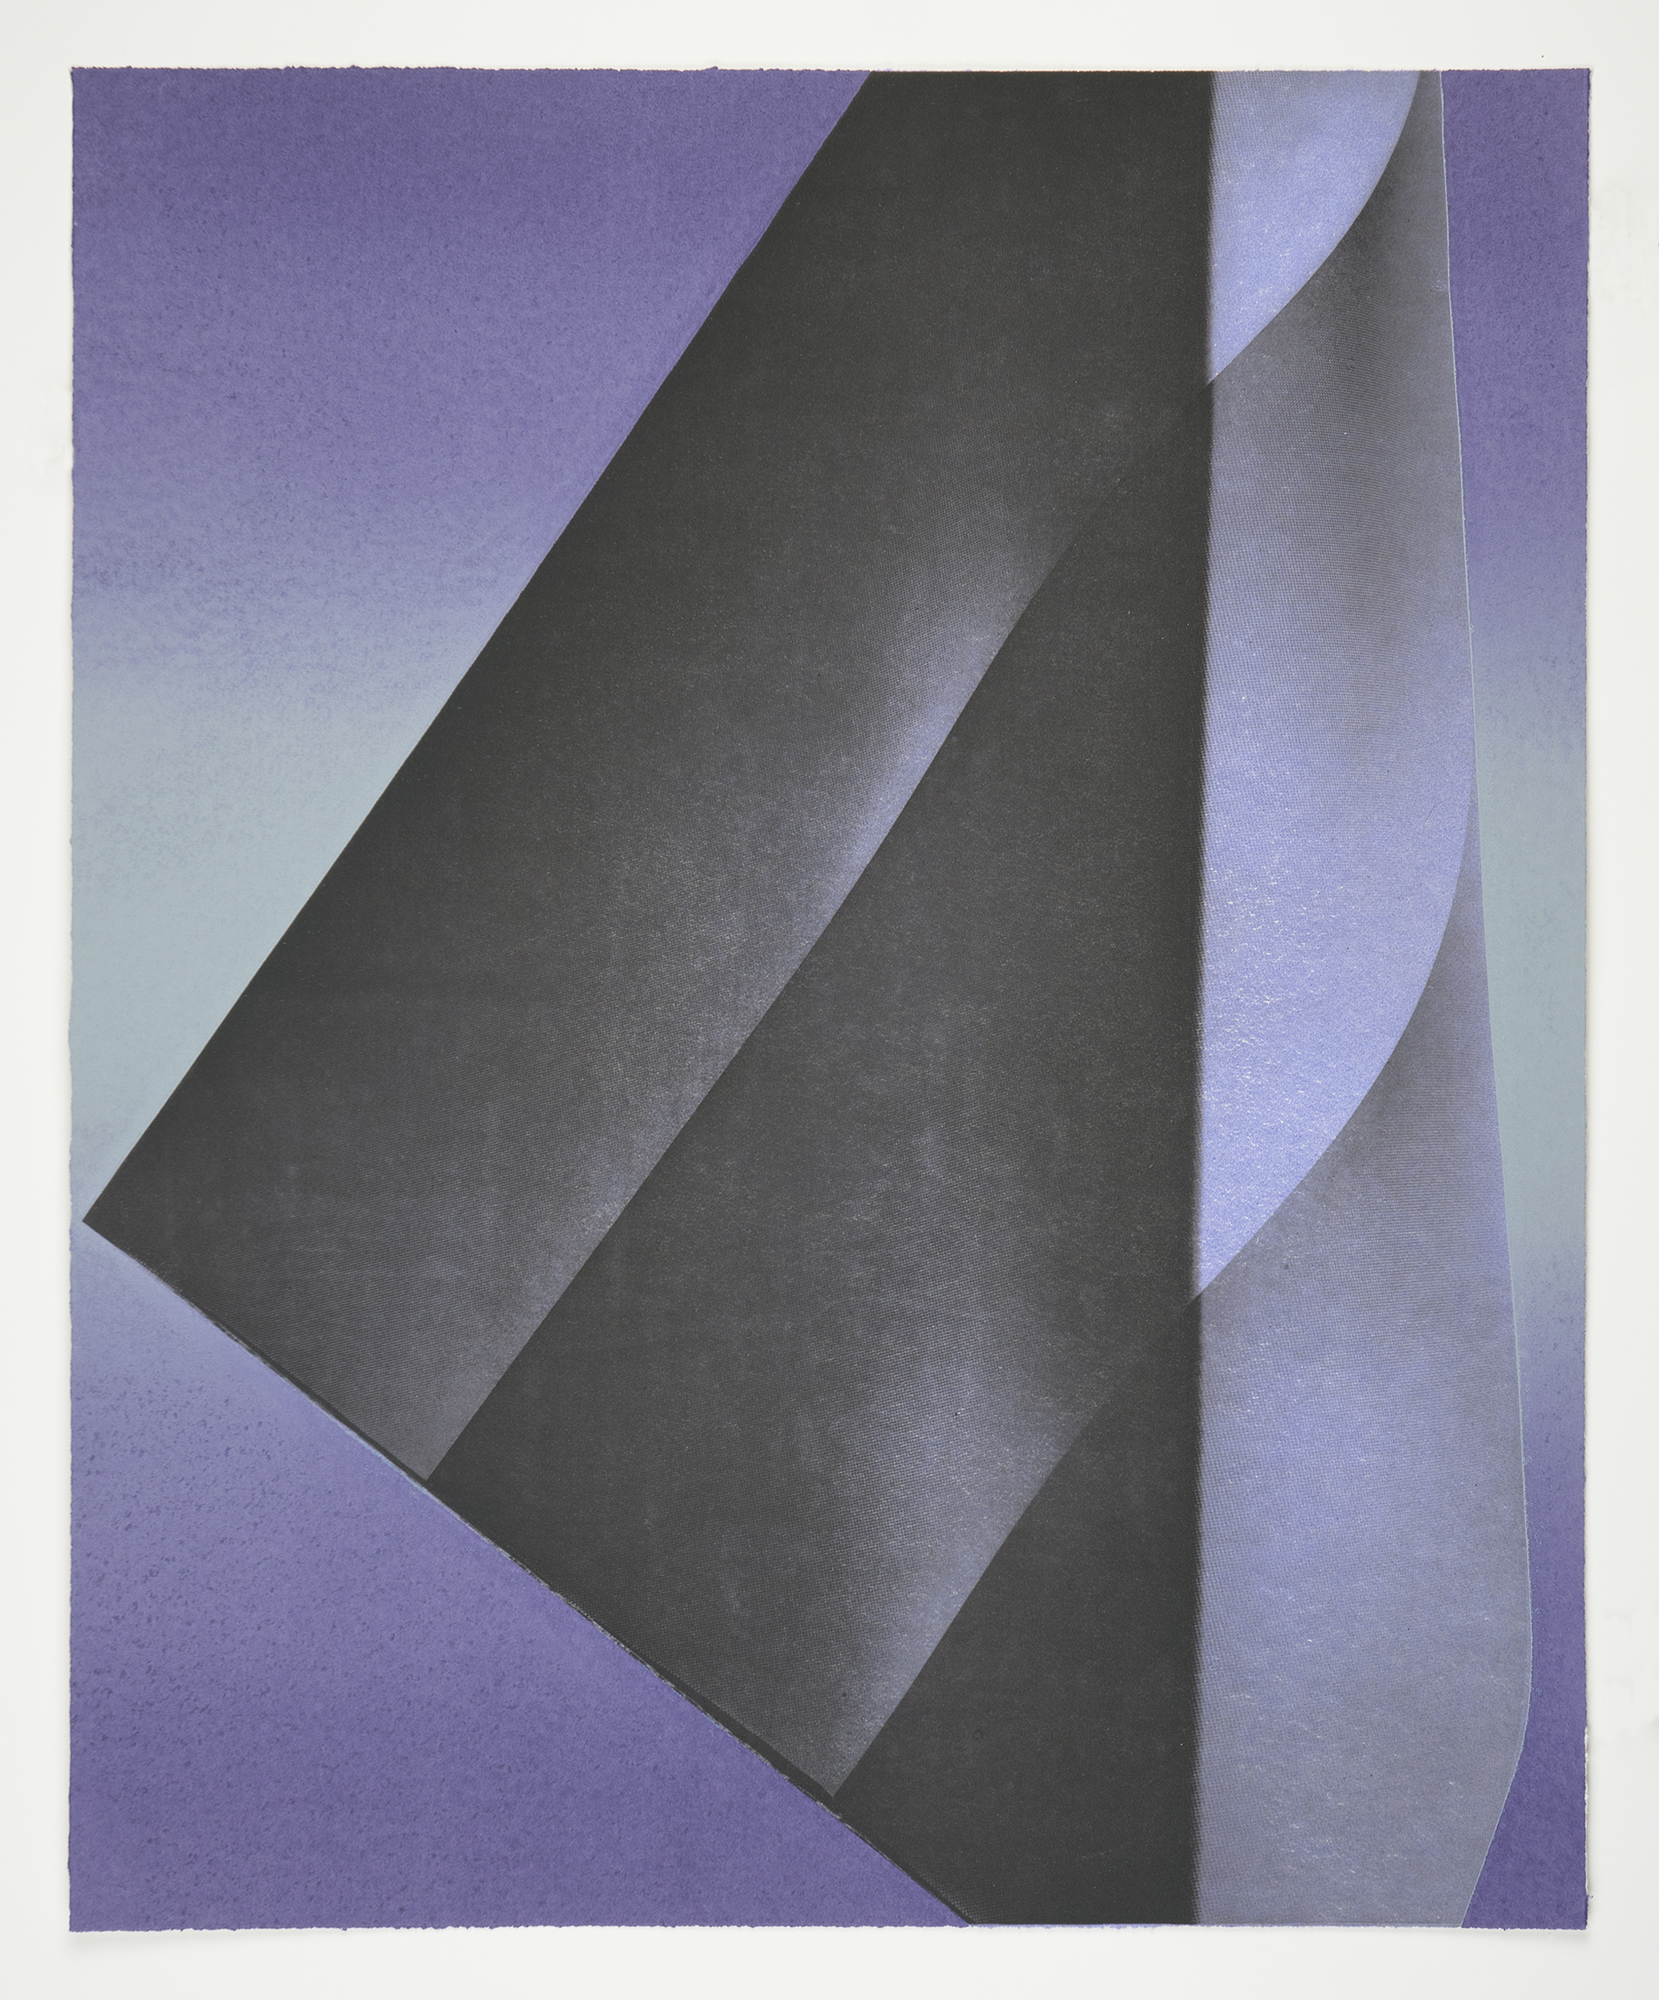 Kate Petley: "Marker 9" 2022. Photogravure monoprint on Hahnemühle Copperplate paper, 24.75" x 20.25". Published by Manneken Press.